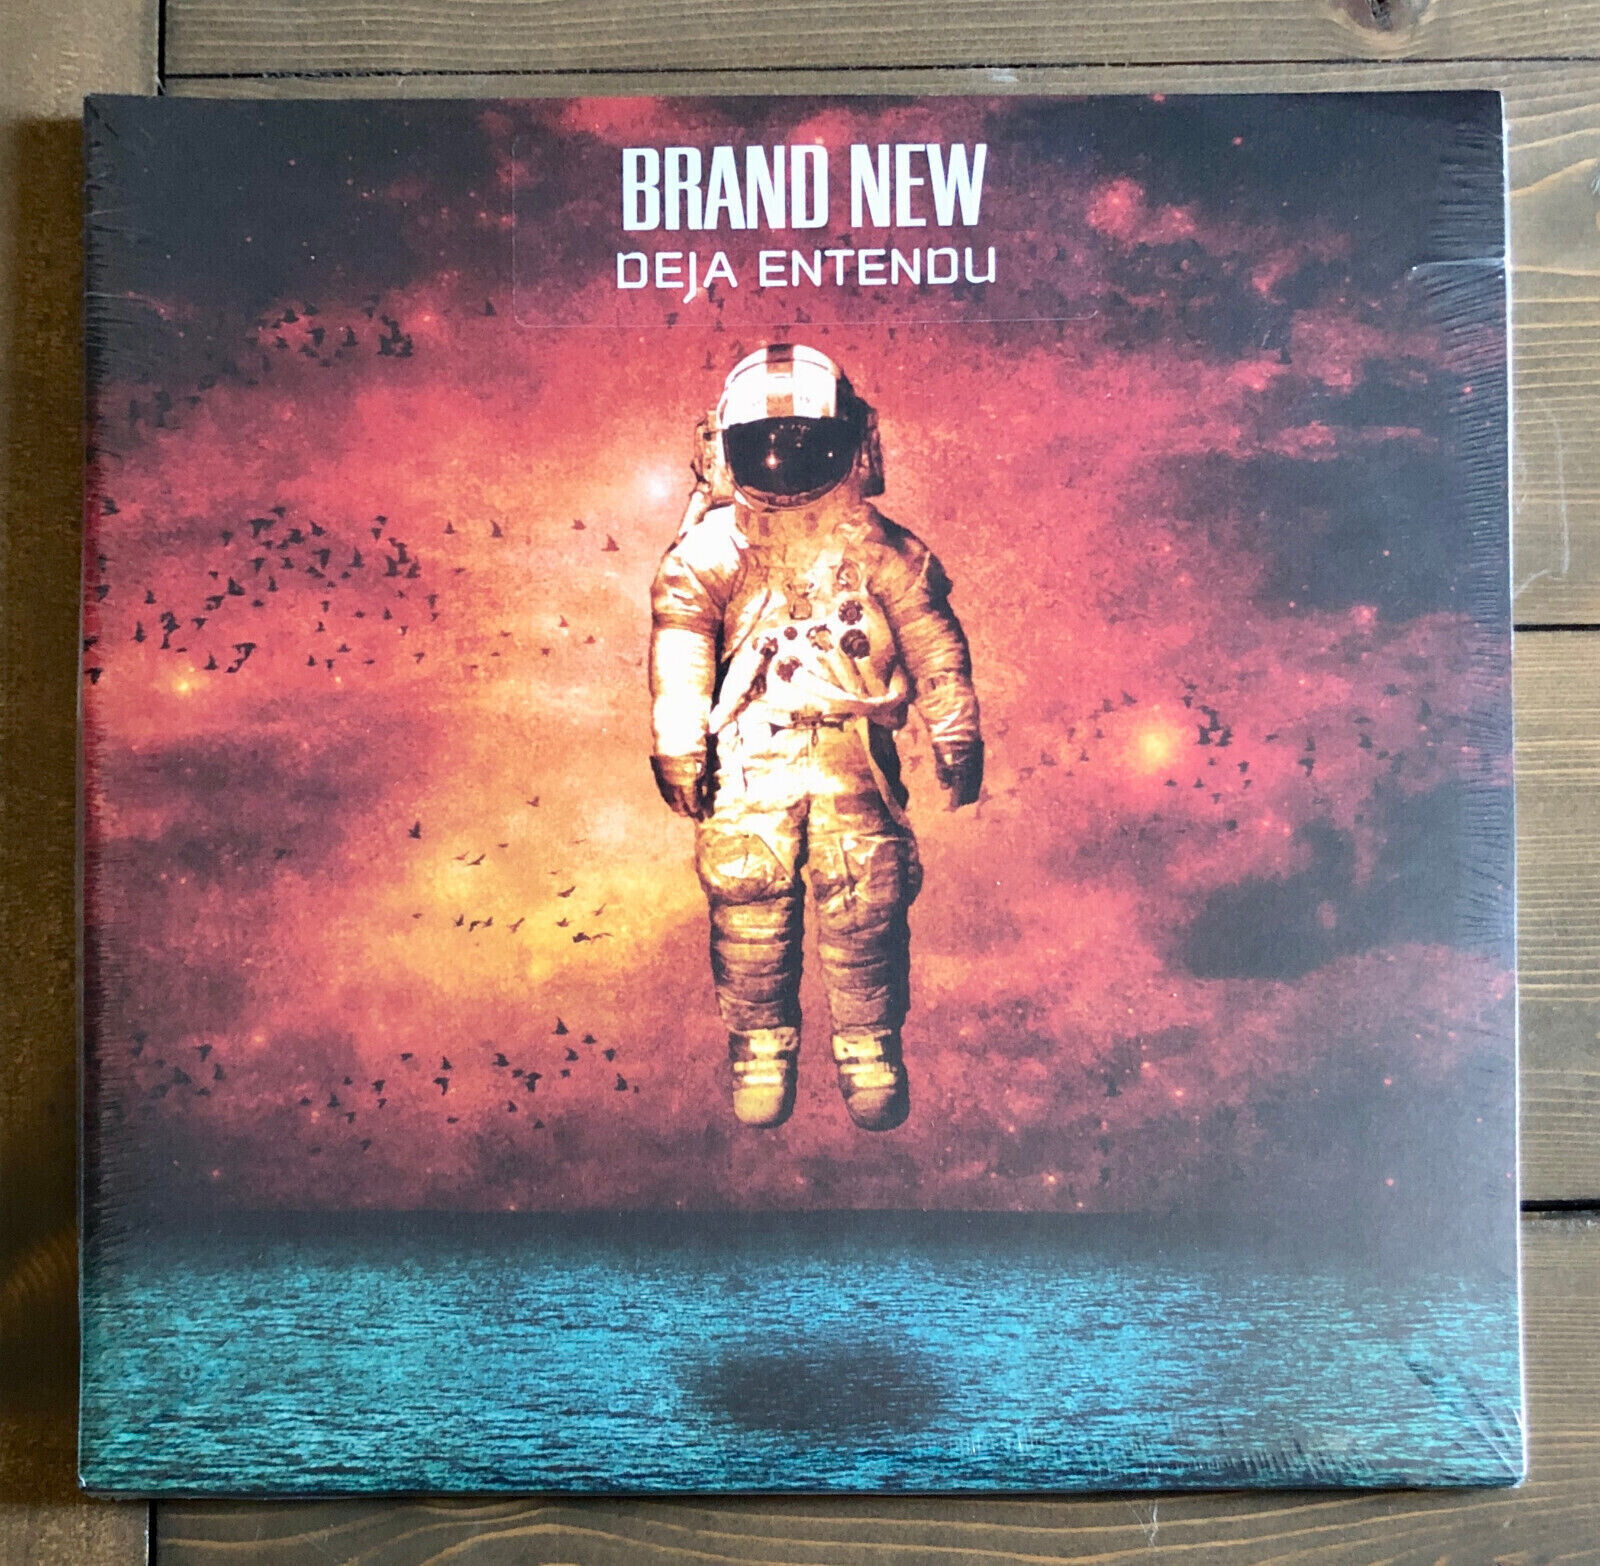 Deja Entendu by Brand New (Vinyl, May-2015, 2 LPs, Triple Crown Records) DAISY